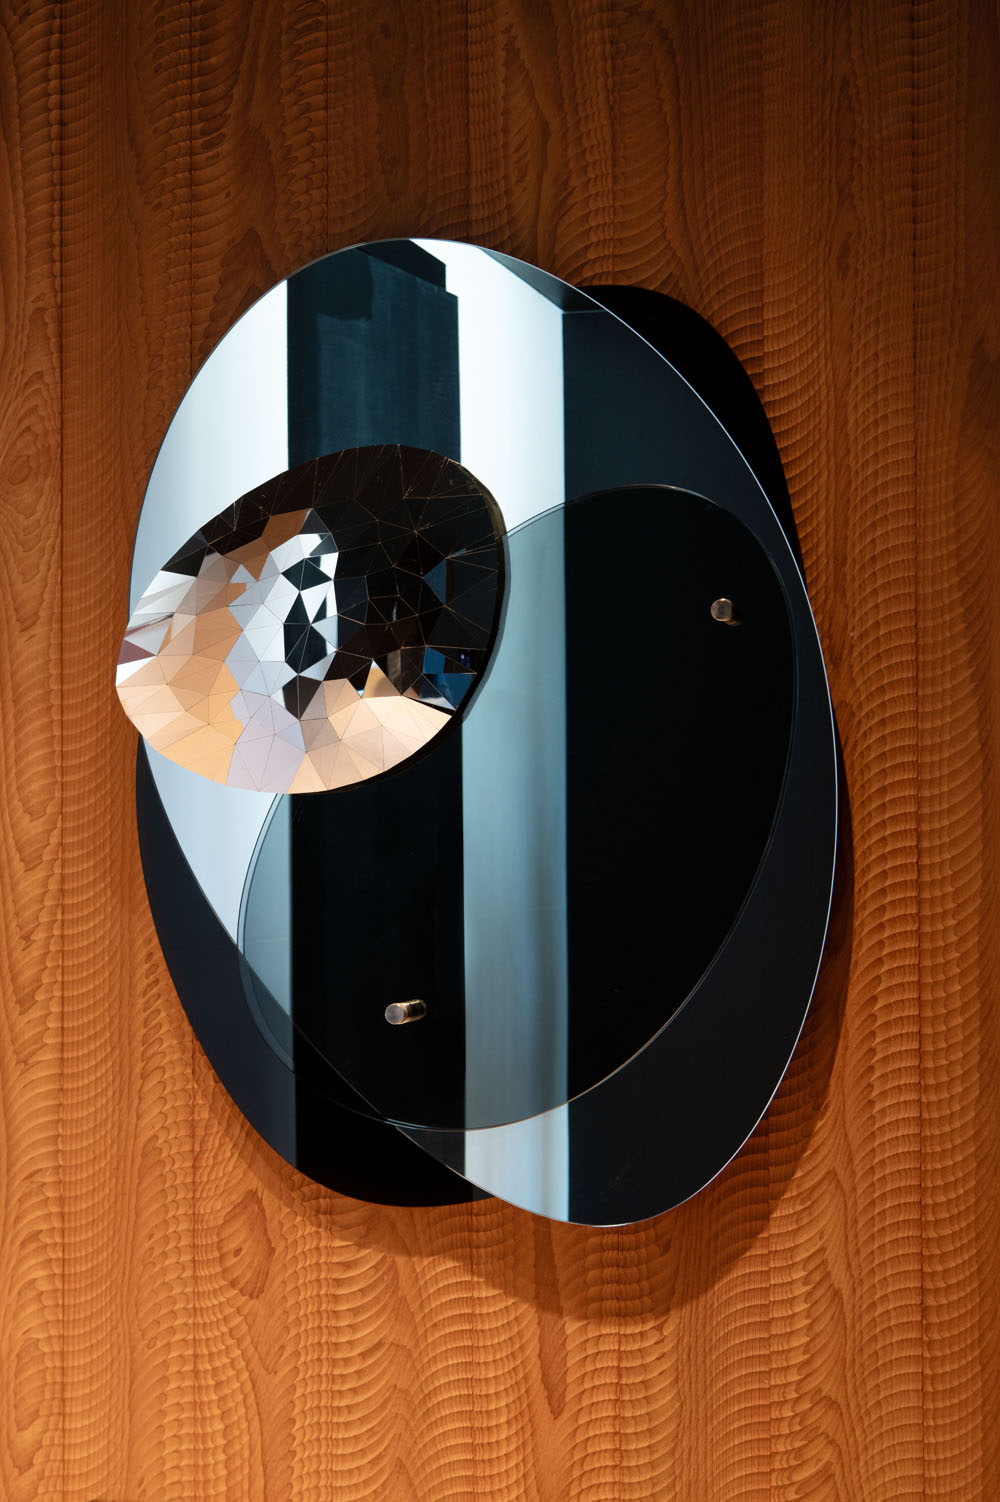 The Star Sydney - hotel room - mirror sculpture